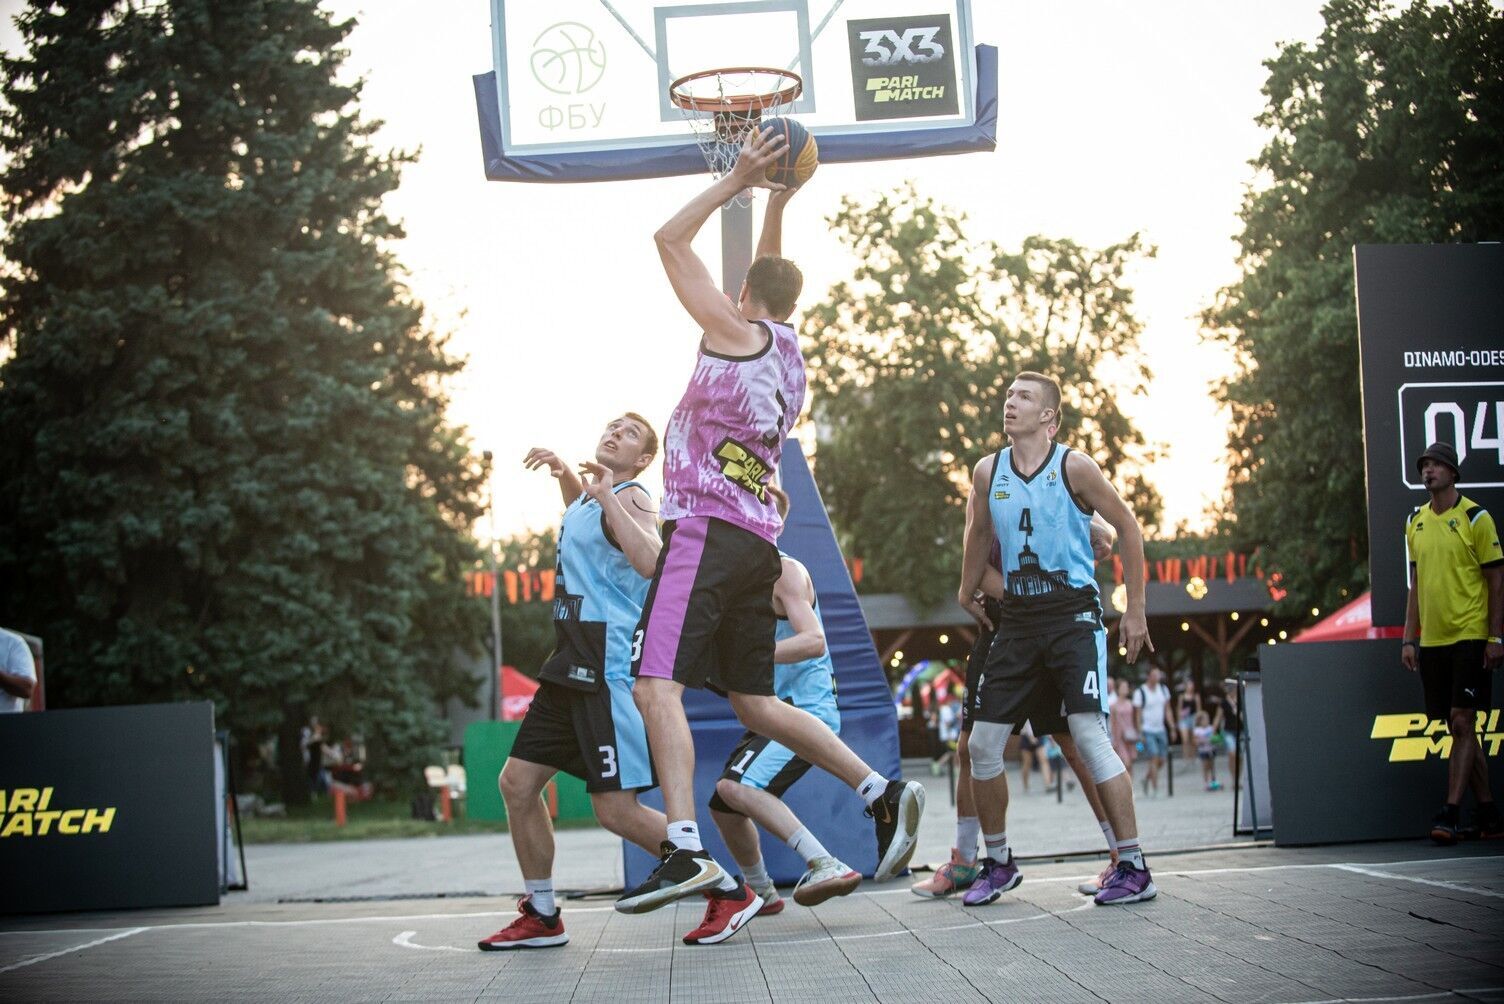 Определились победители 3-го тура чемпионата Украины по баскетболу 3х3